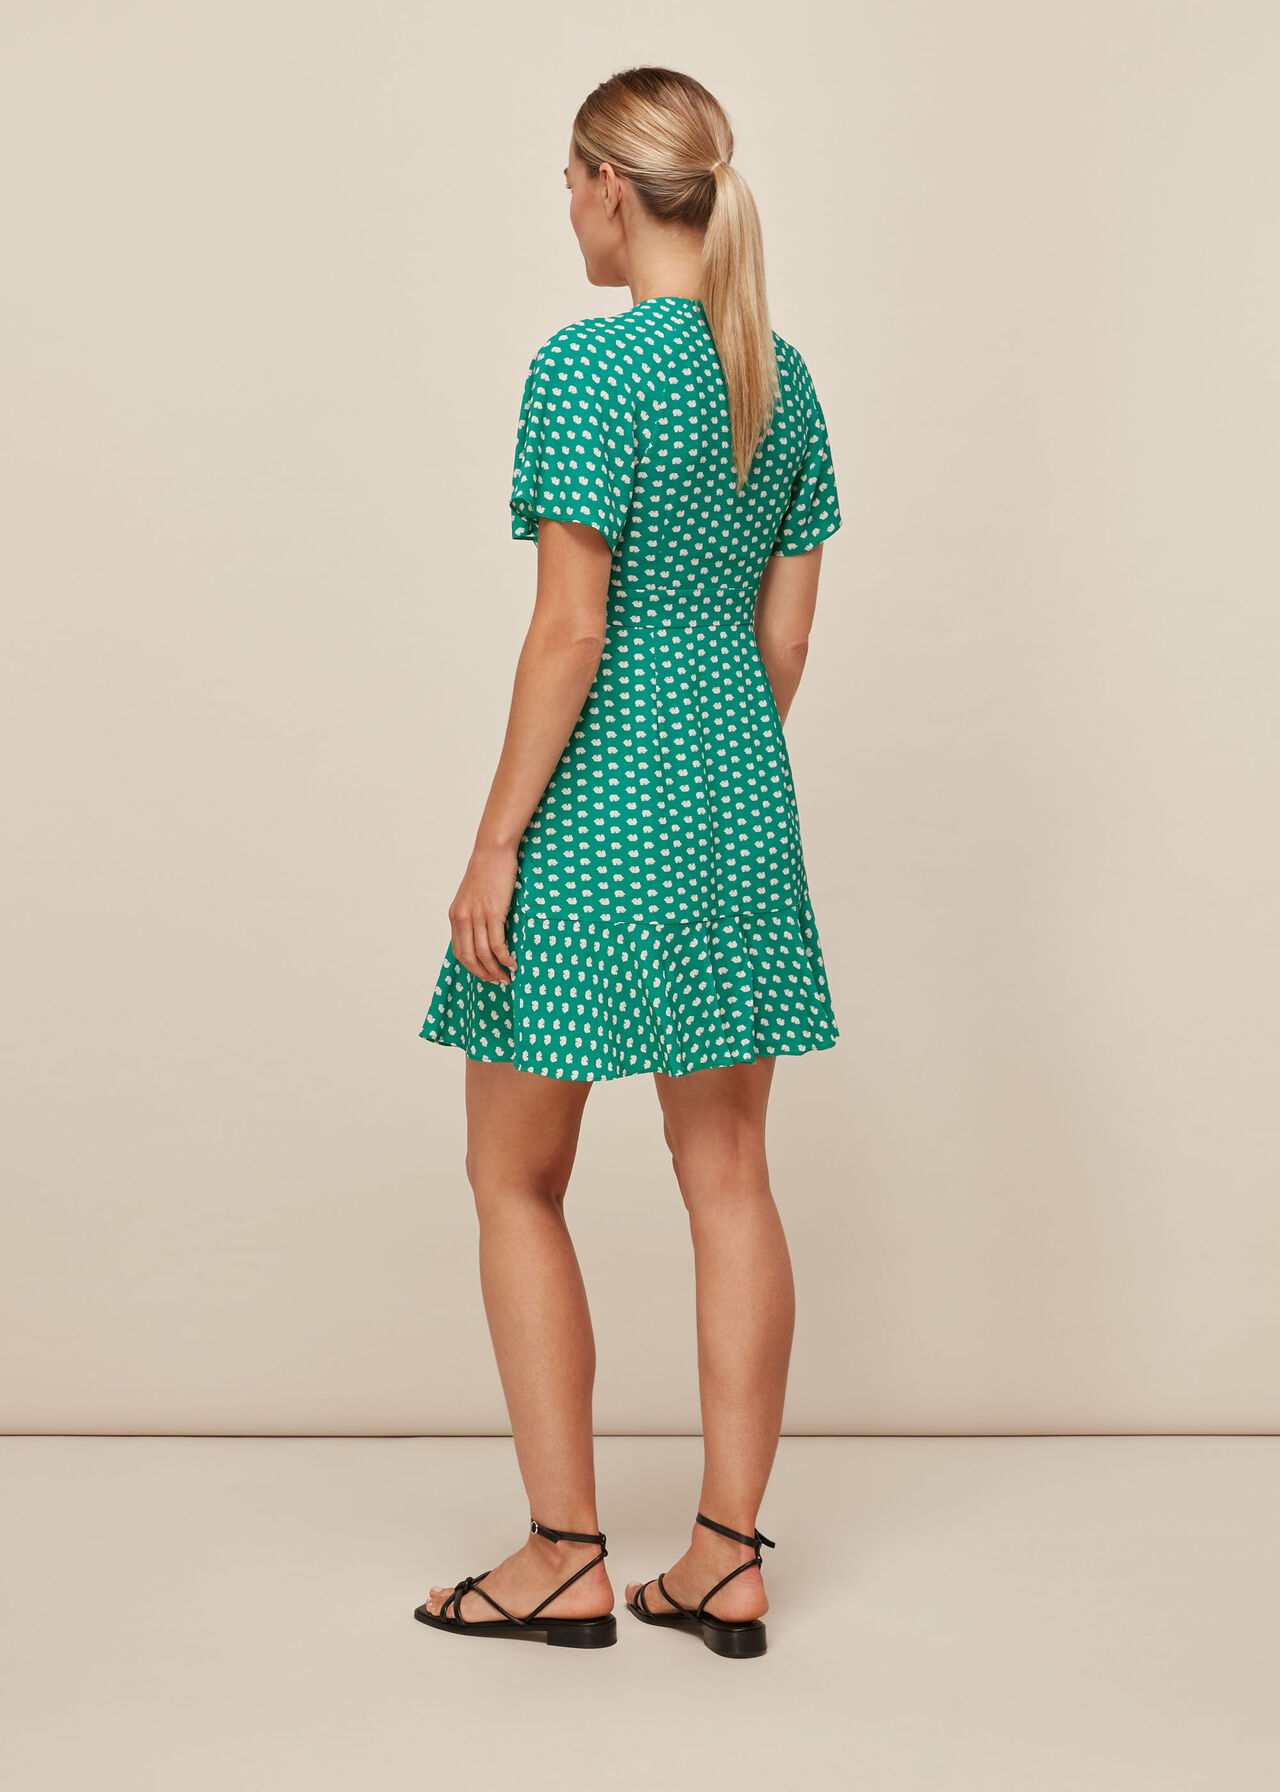 Elephant Print Dress Green/Multi